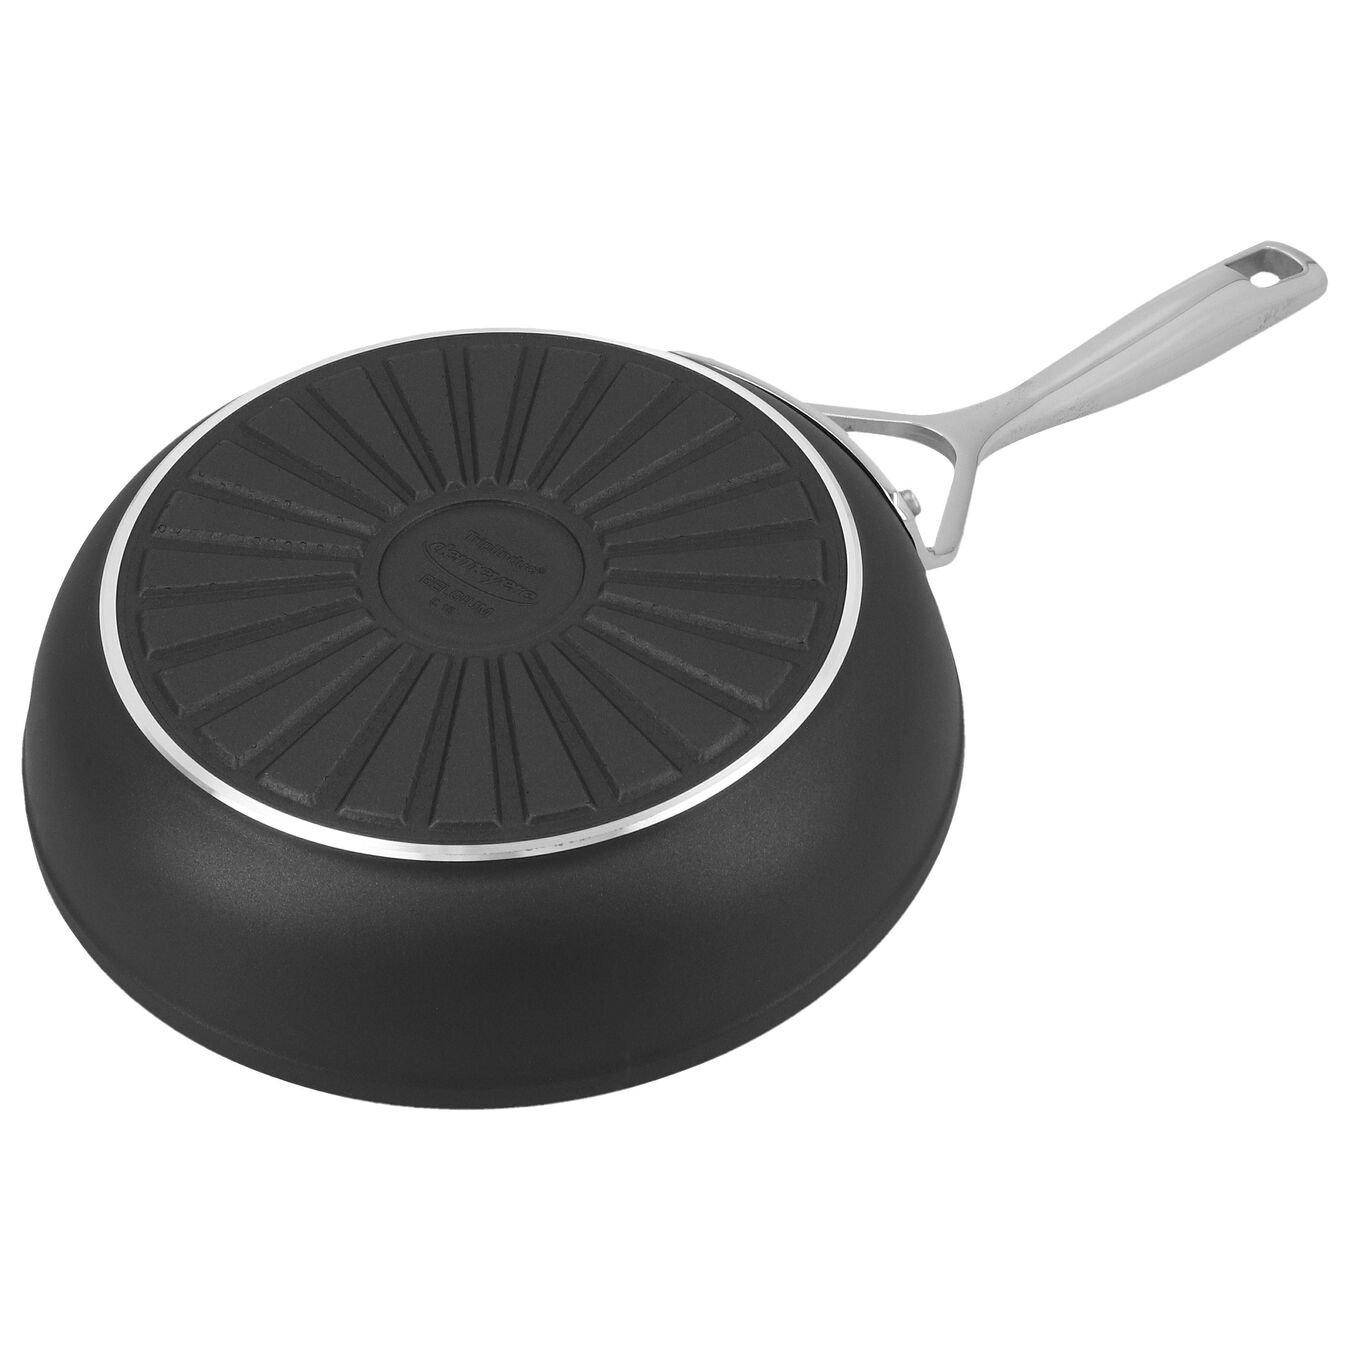 8-inch, aluminum, Non-stick Frying pan,,large 5